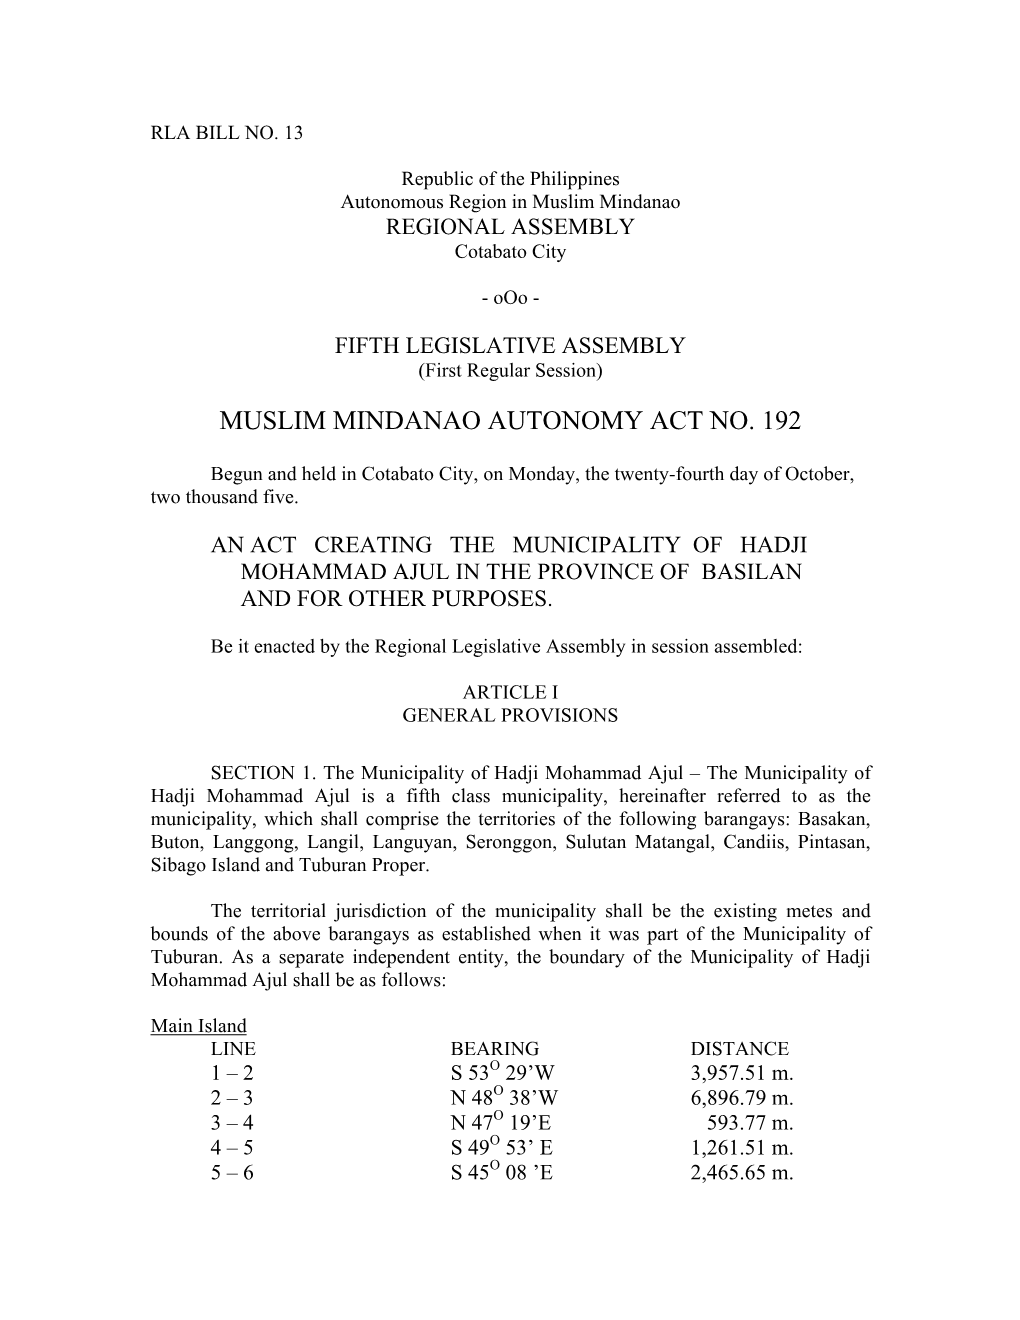 Muslim Mindanao Autonomy Act No. 192